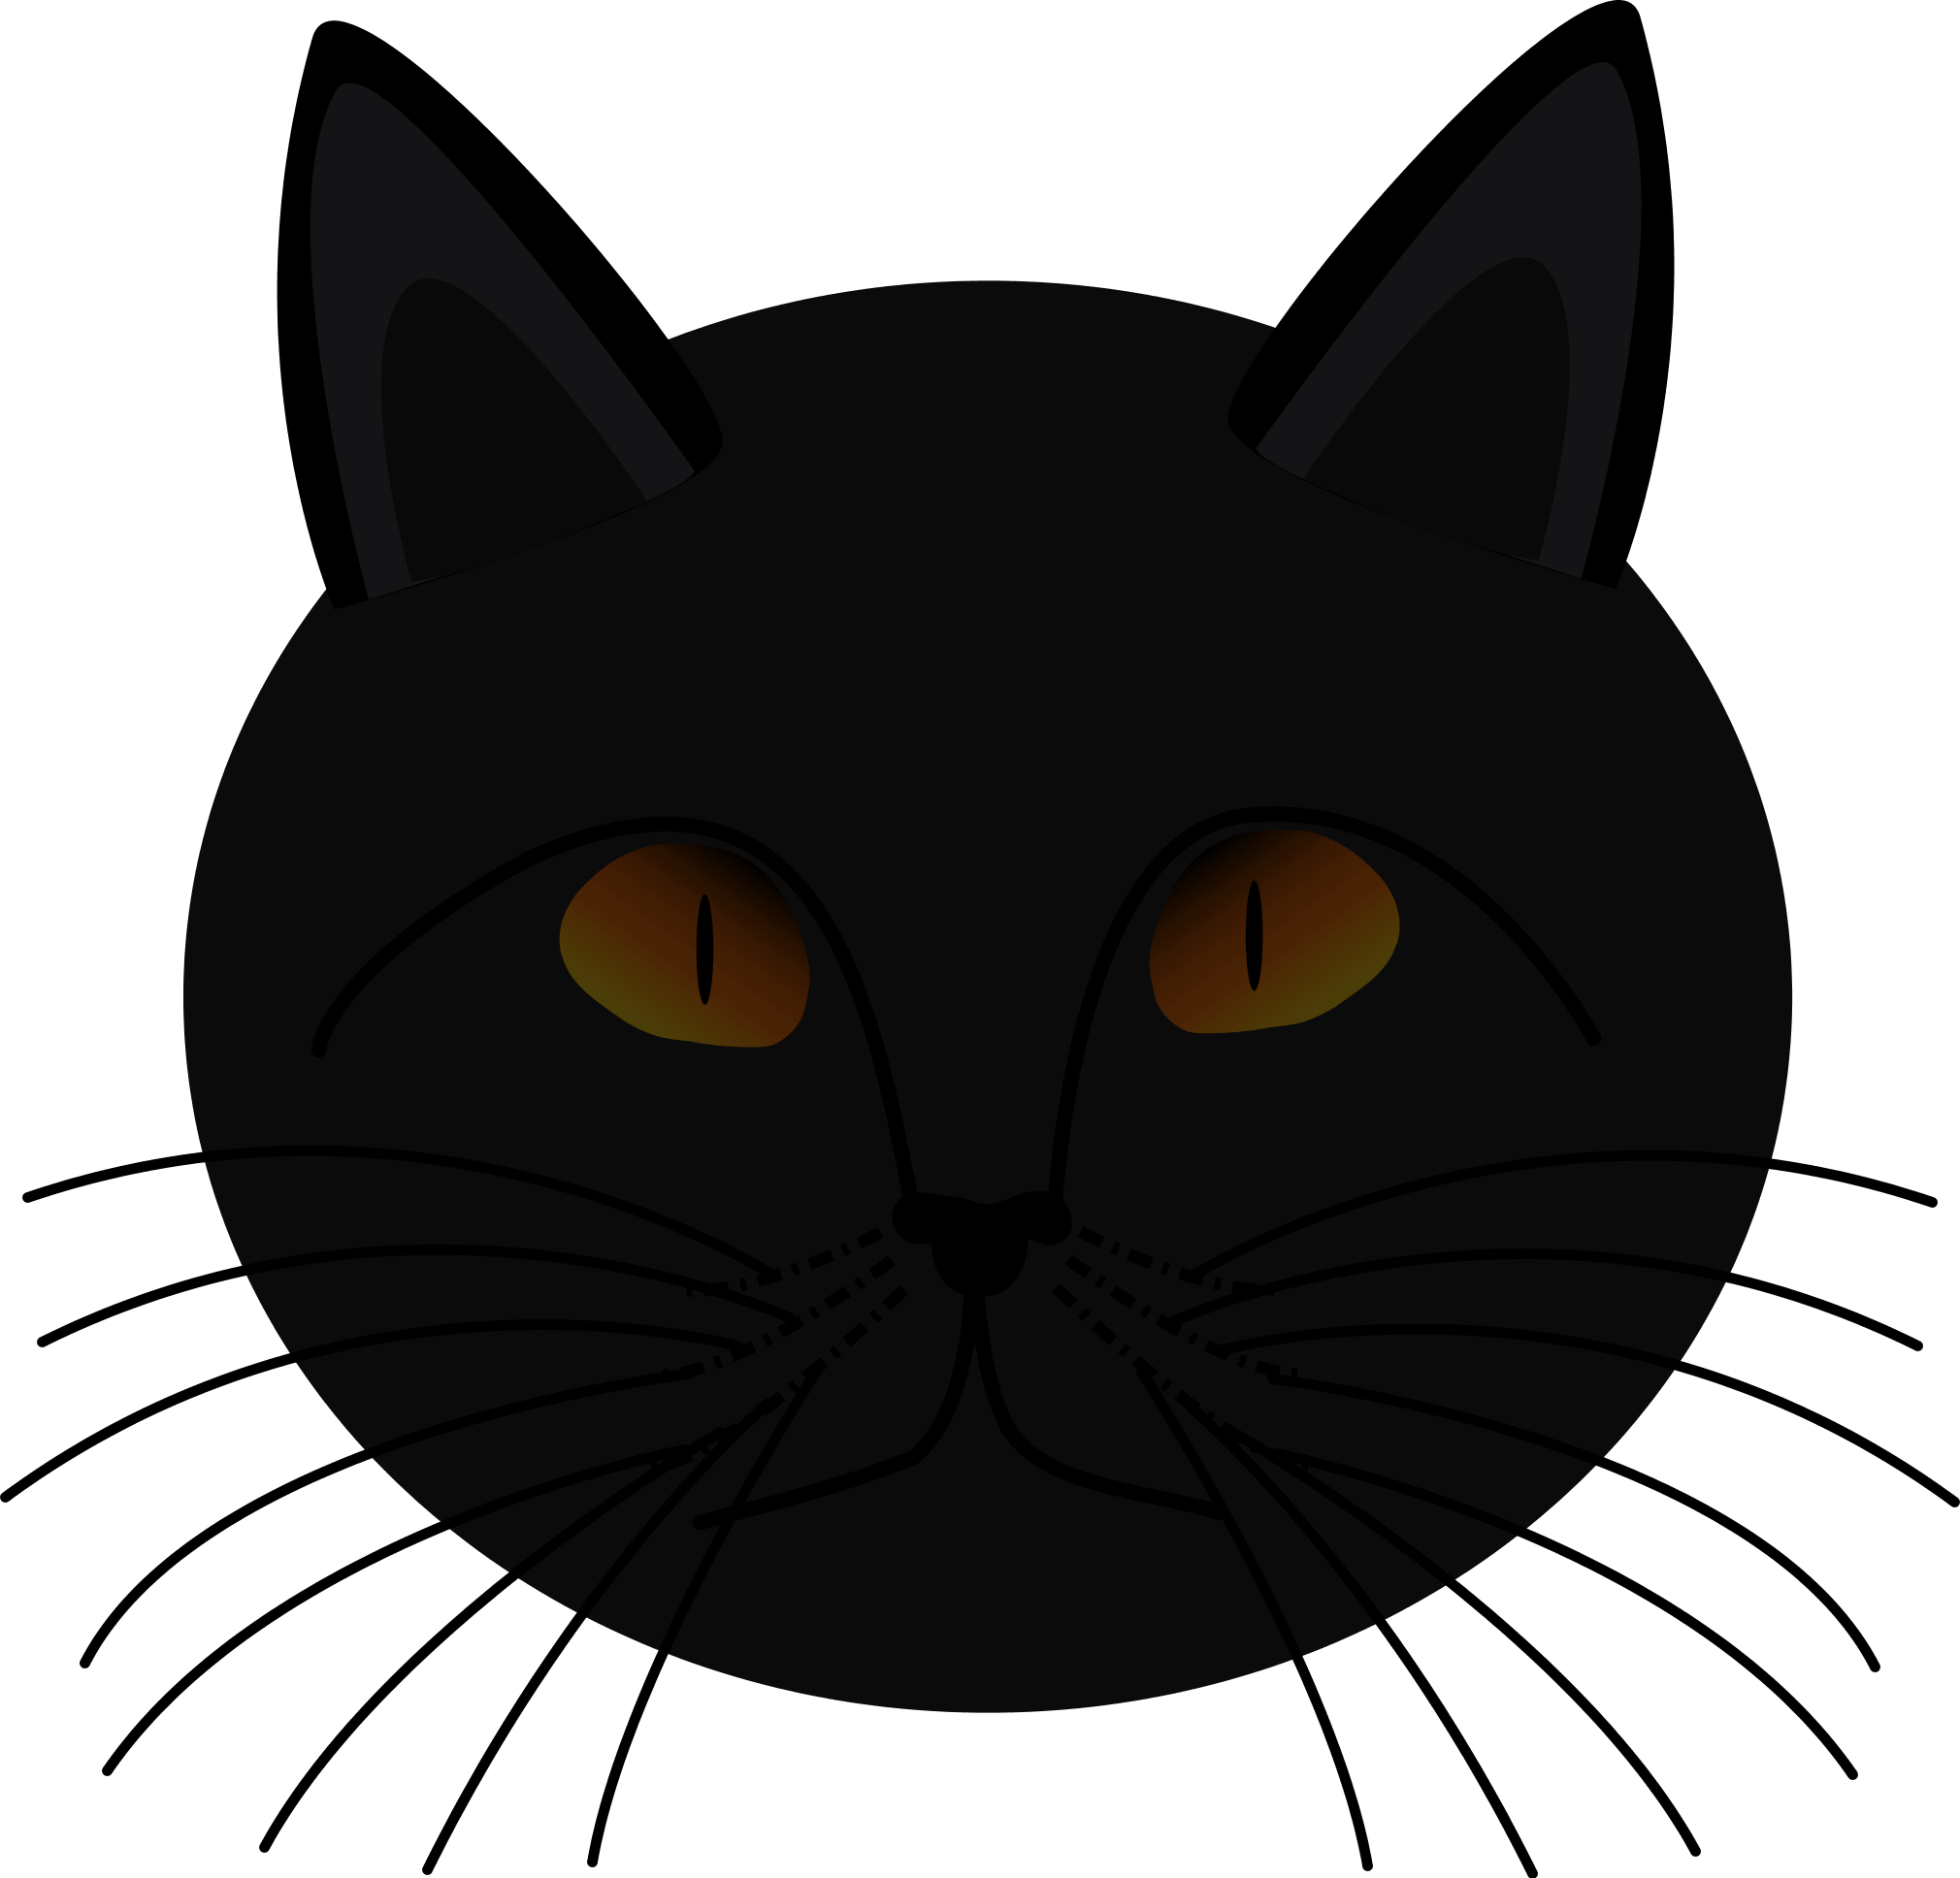 Halloween Black Cat Clip Art - ClipArt Best